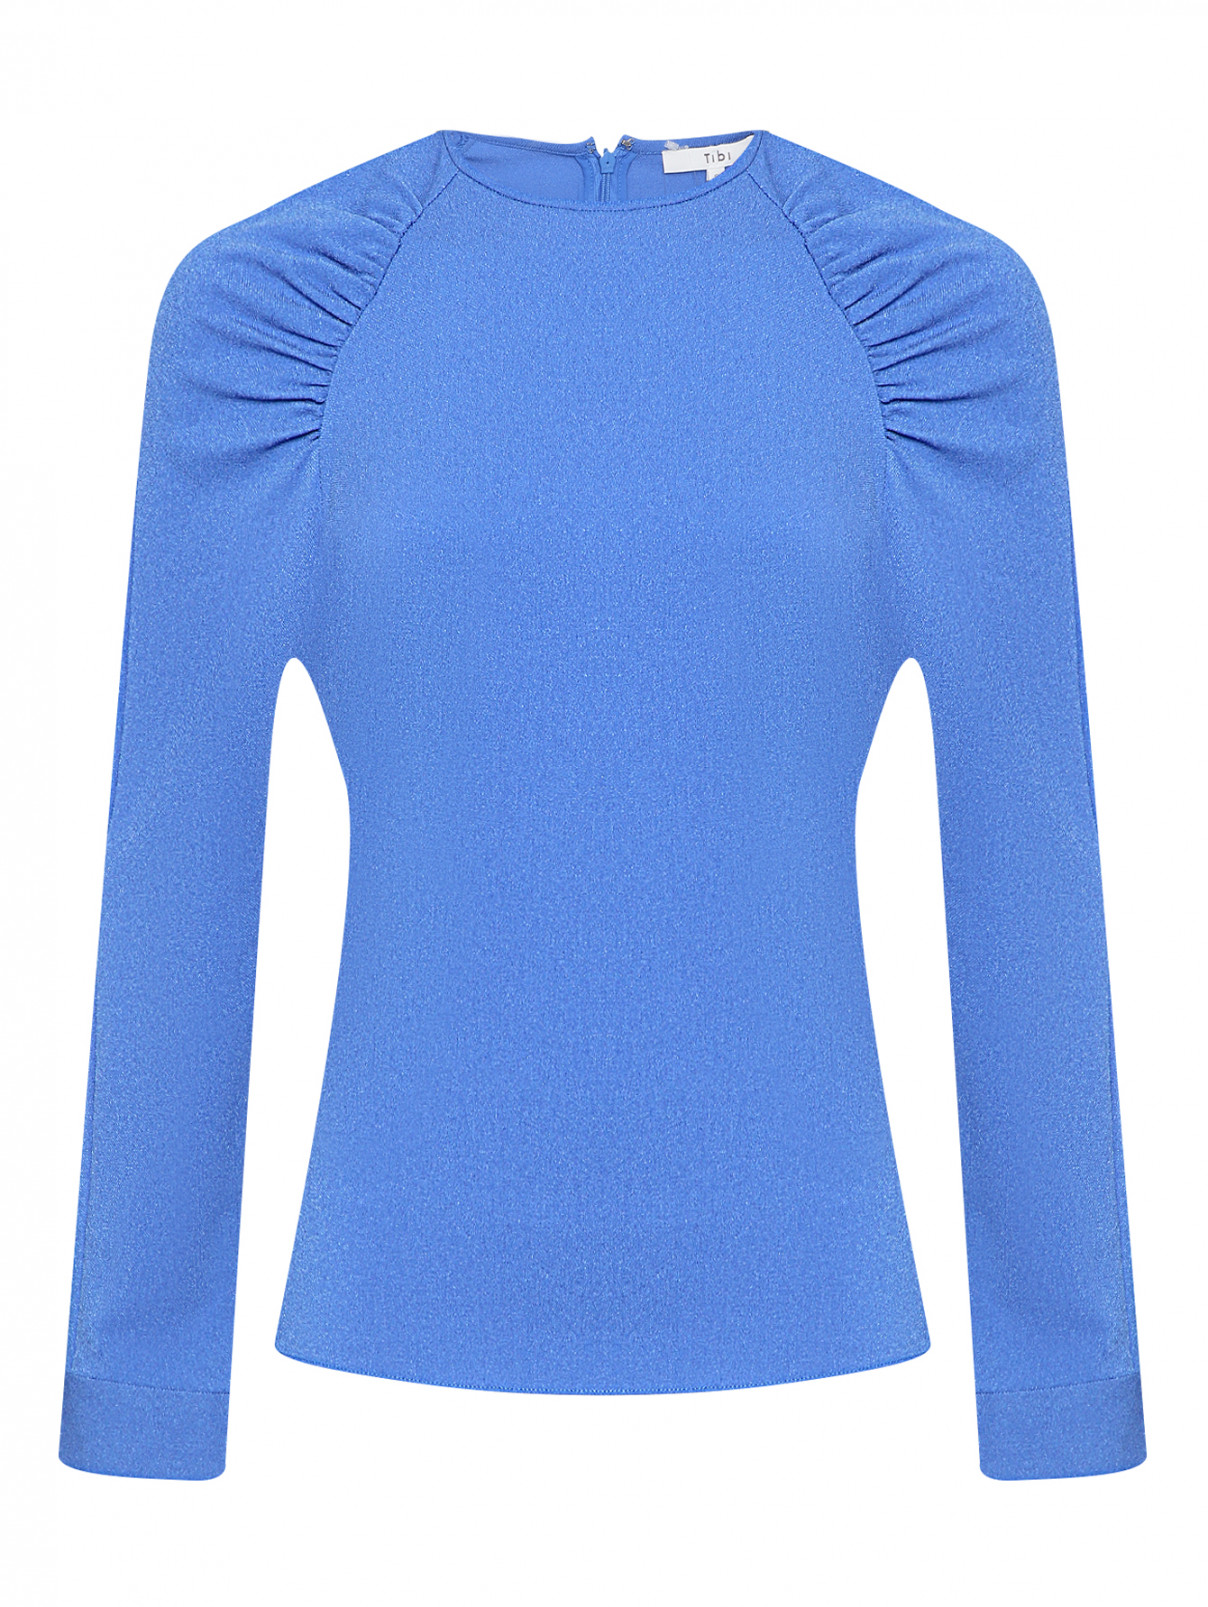 Блуза свободного кроя со сборками TIBI  –  Общий вид  – Цвет:  Синий